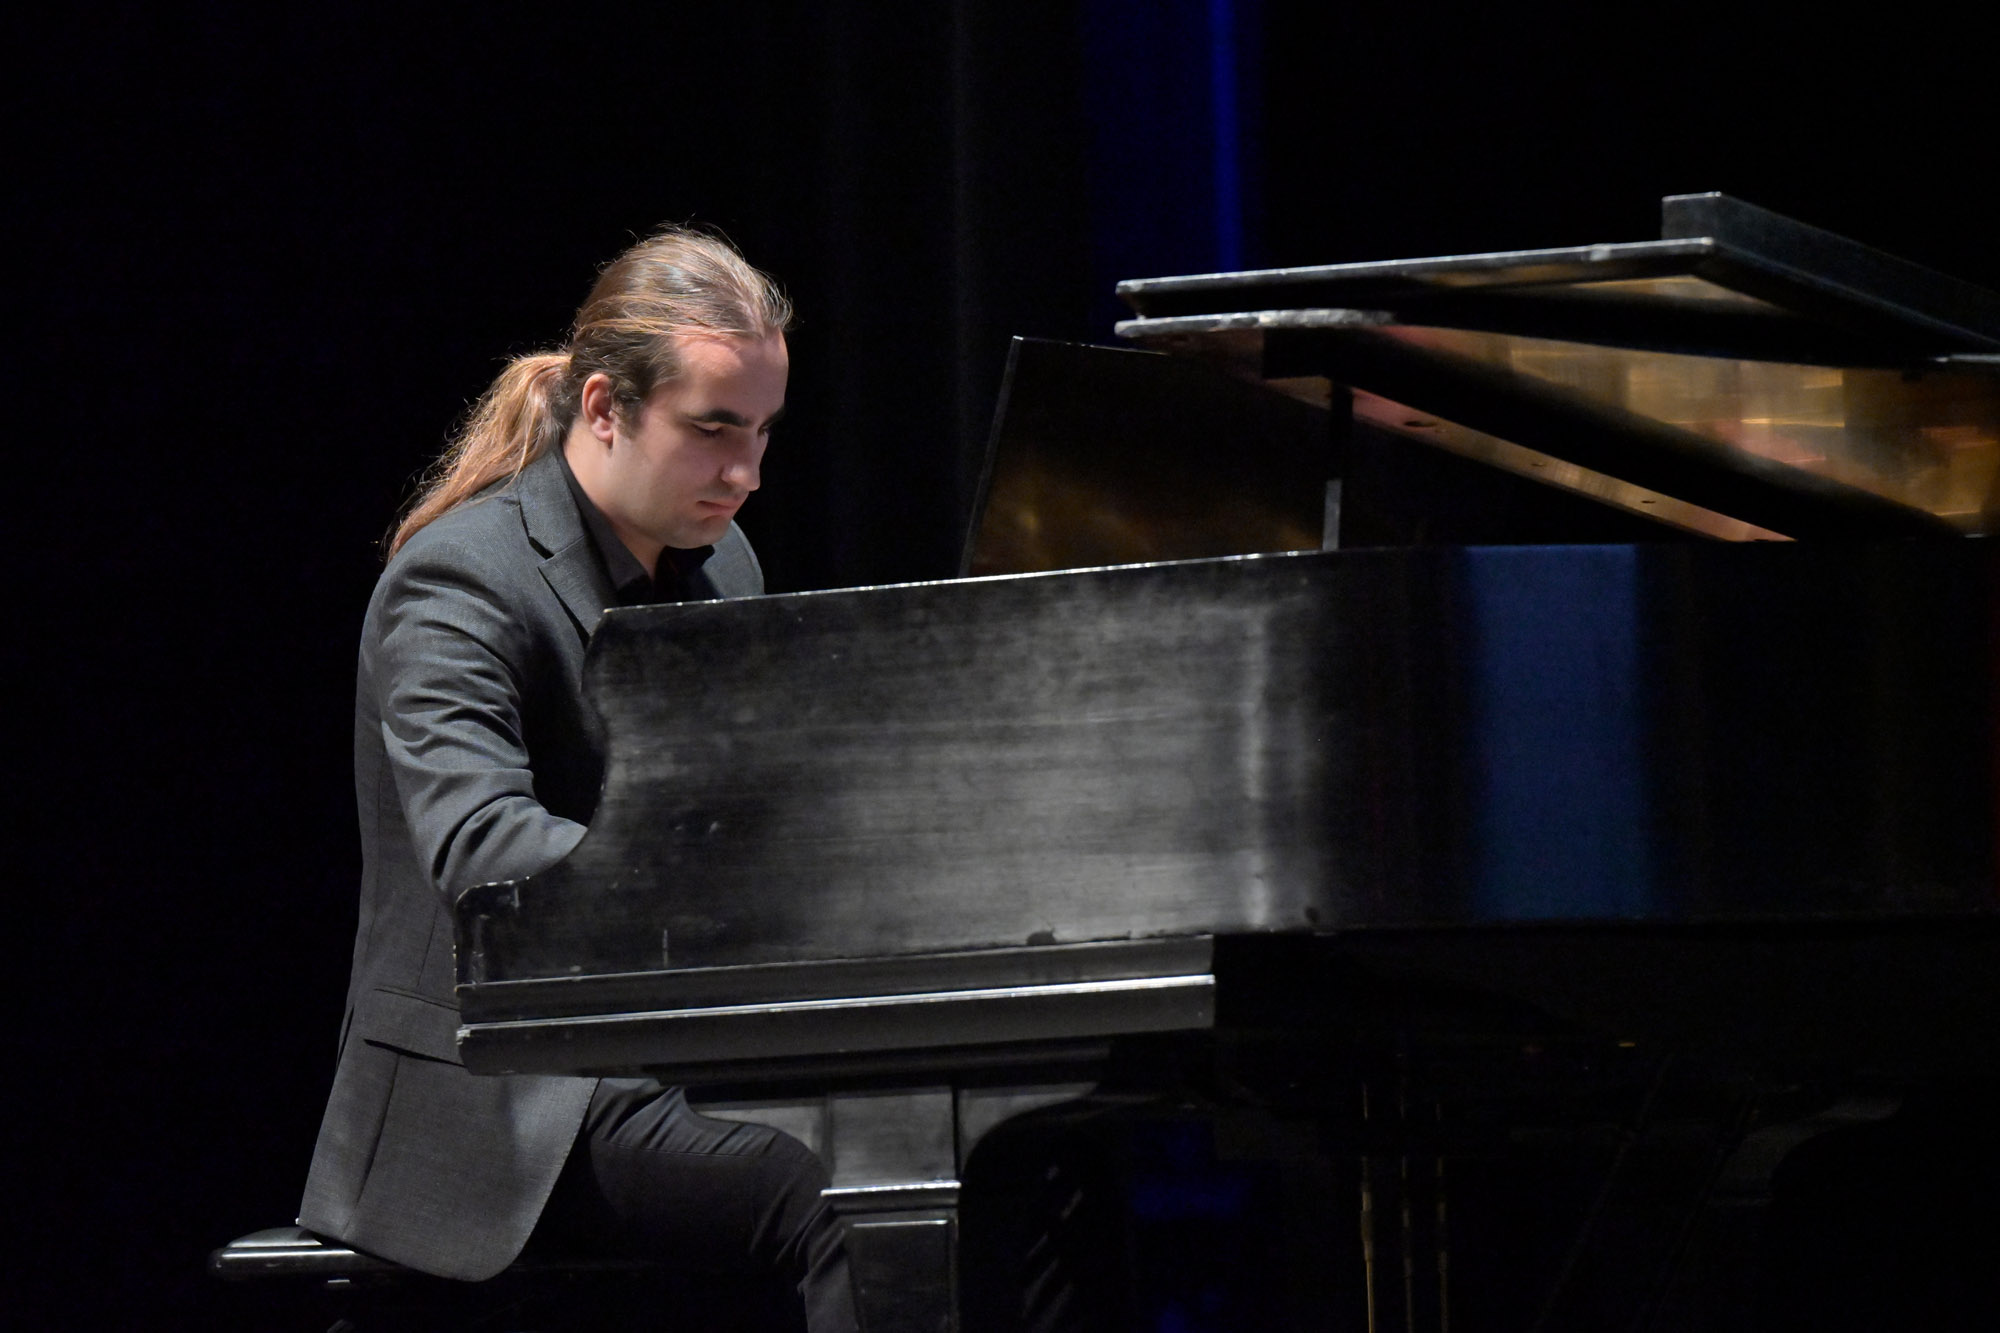 Man with ponytail wearing dark grey suit playing piano.